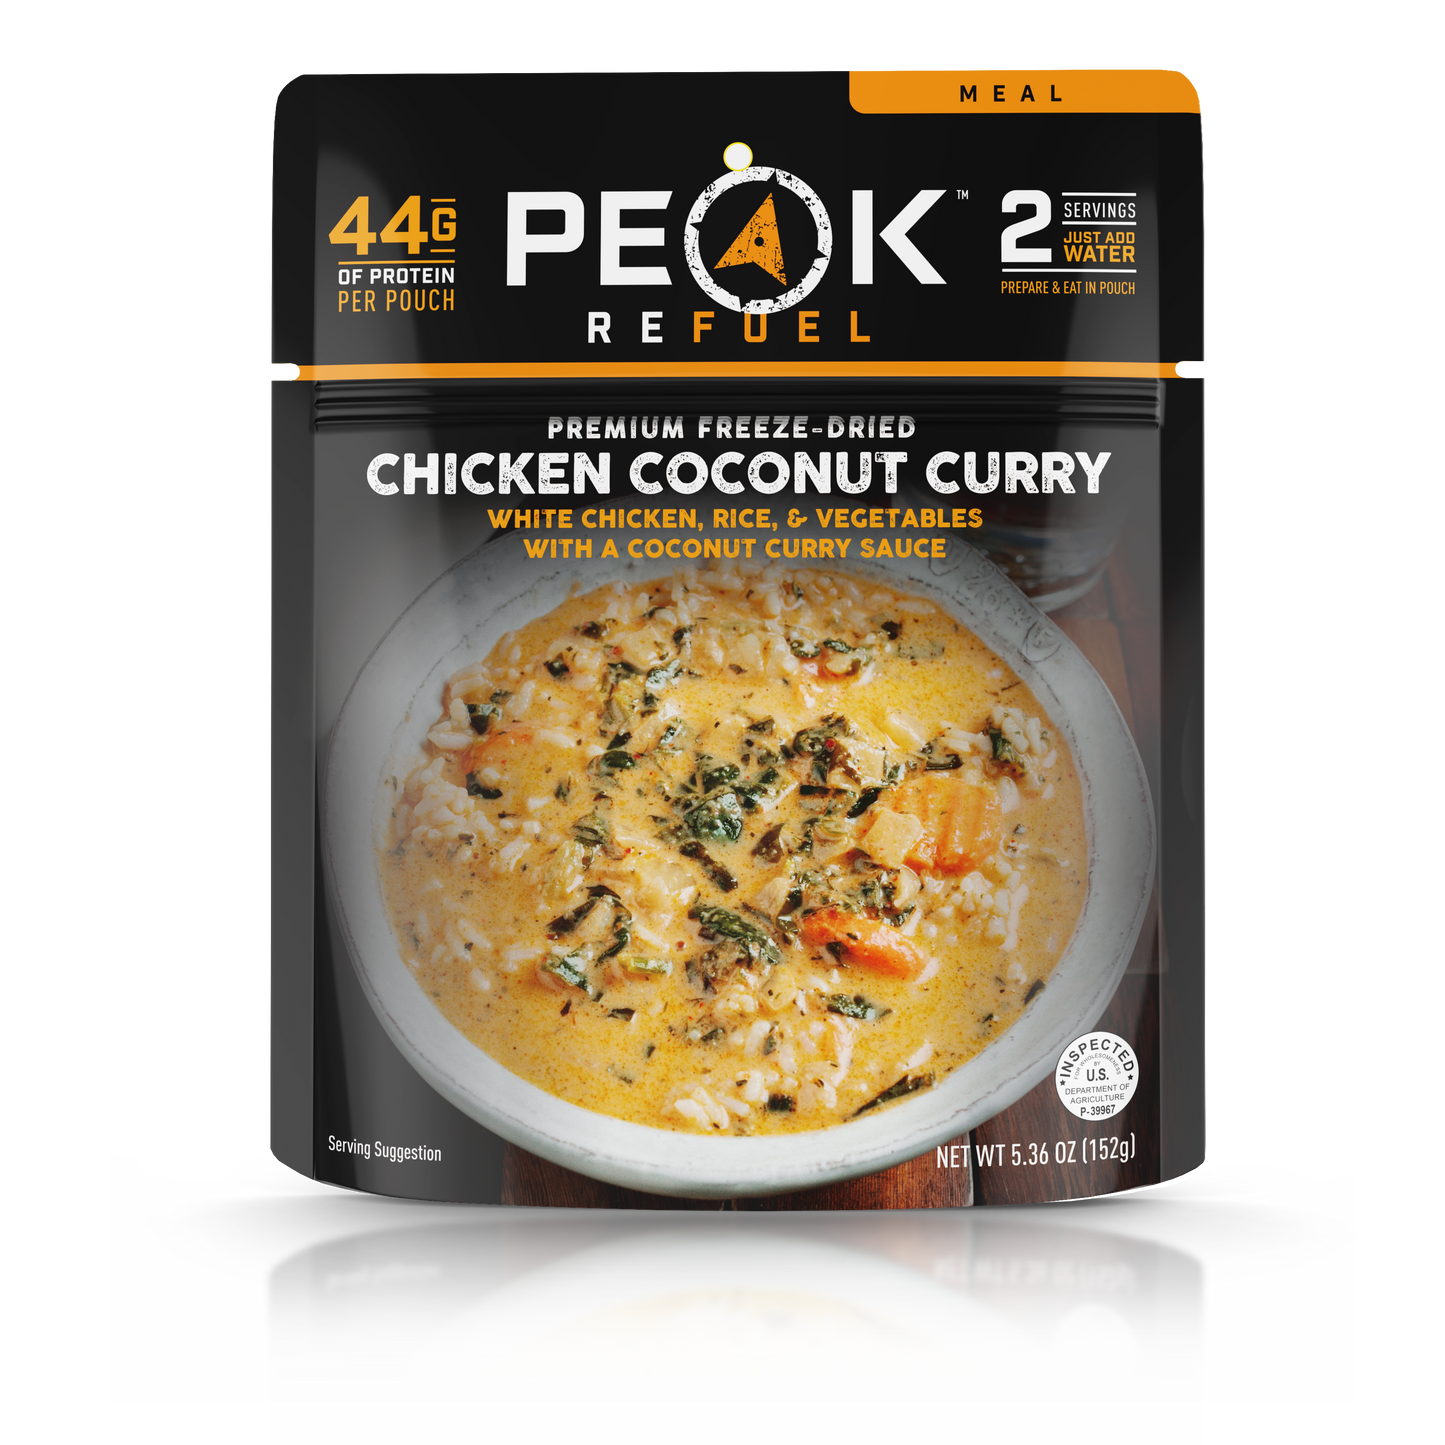 Chicken Coconut Curry by Peak Refuel